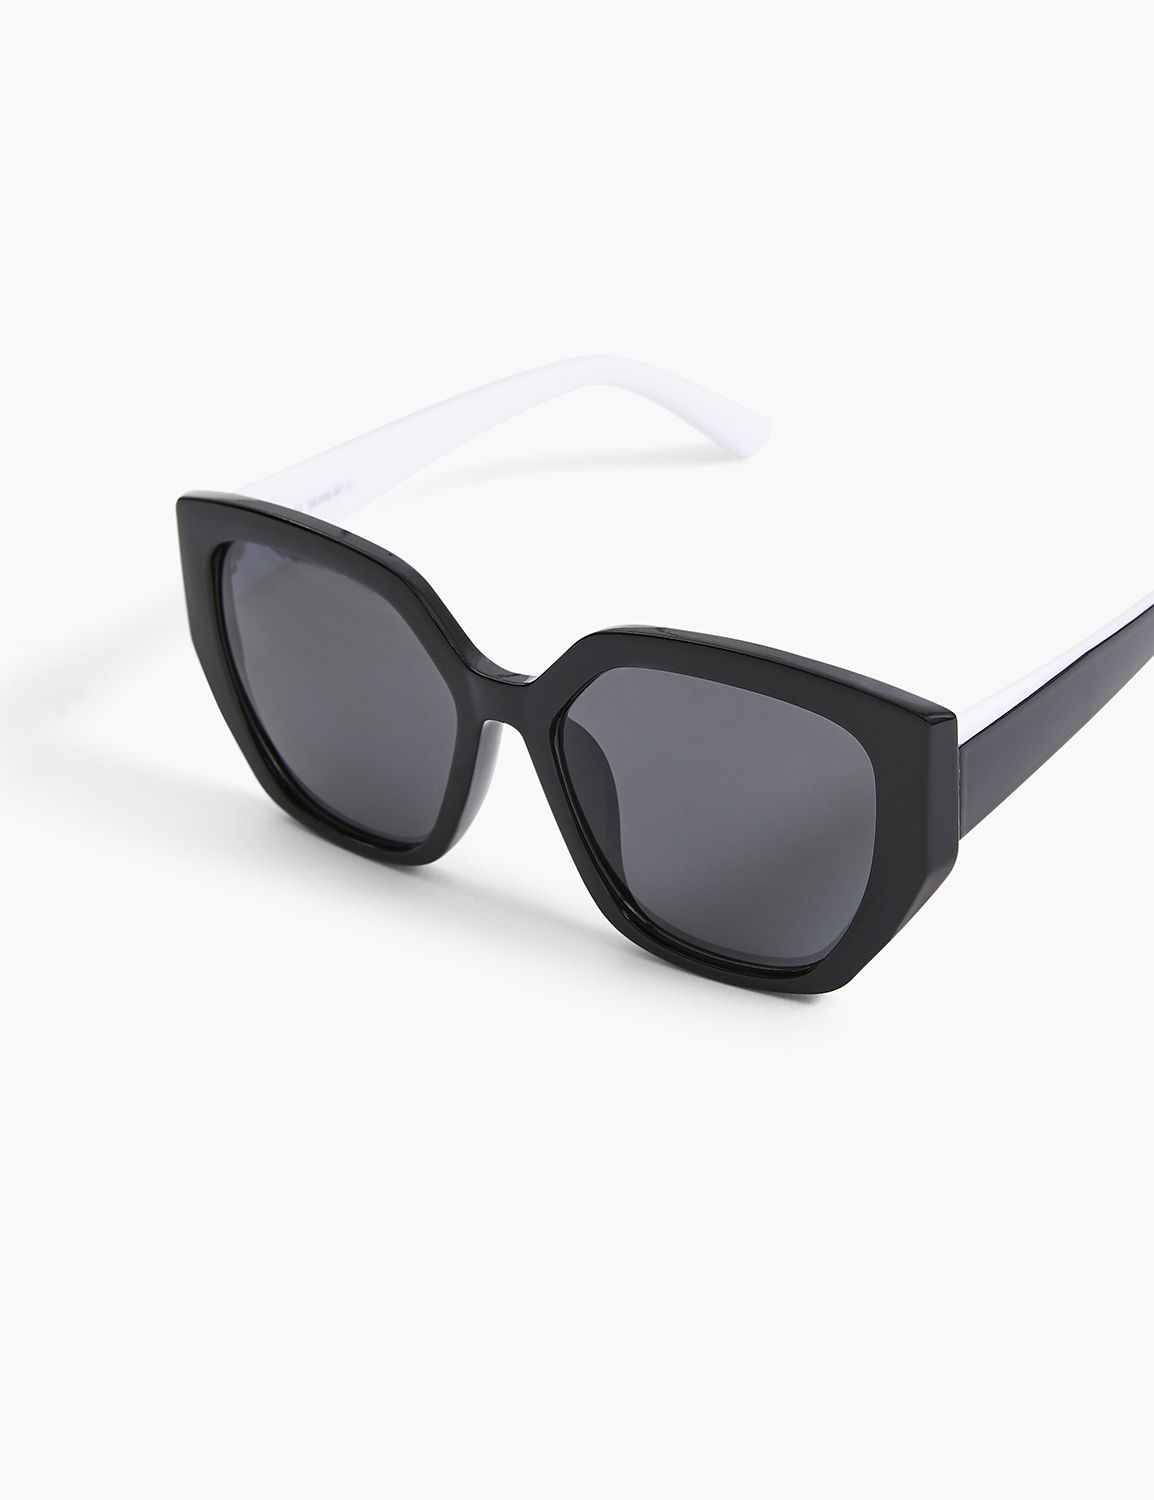 Black & White Cateye Sunglasses